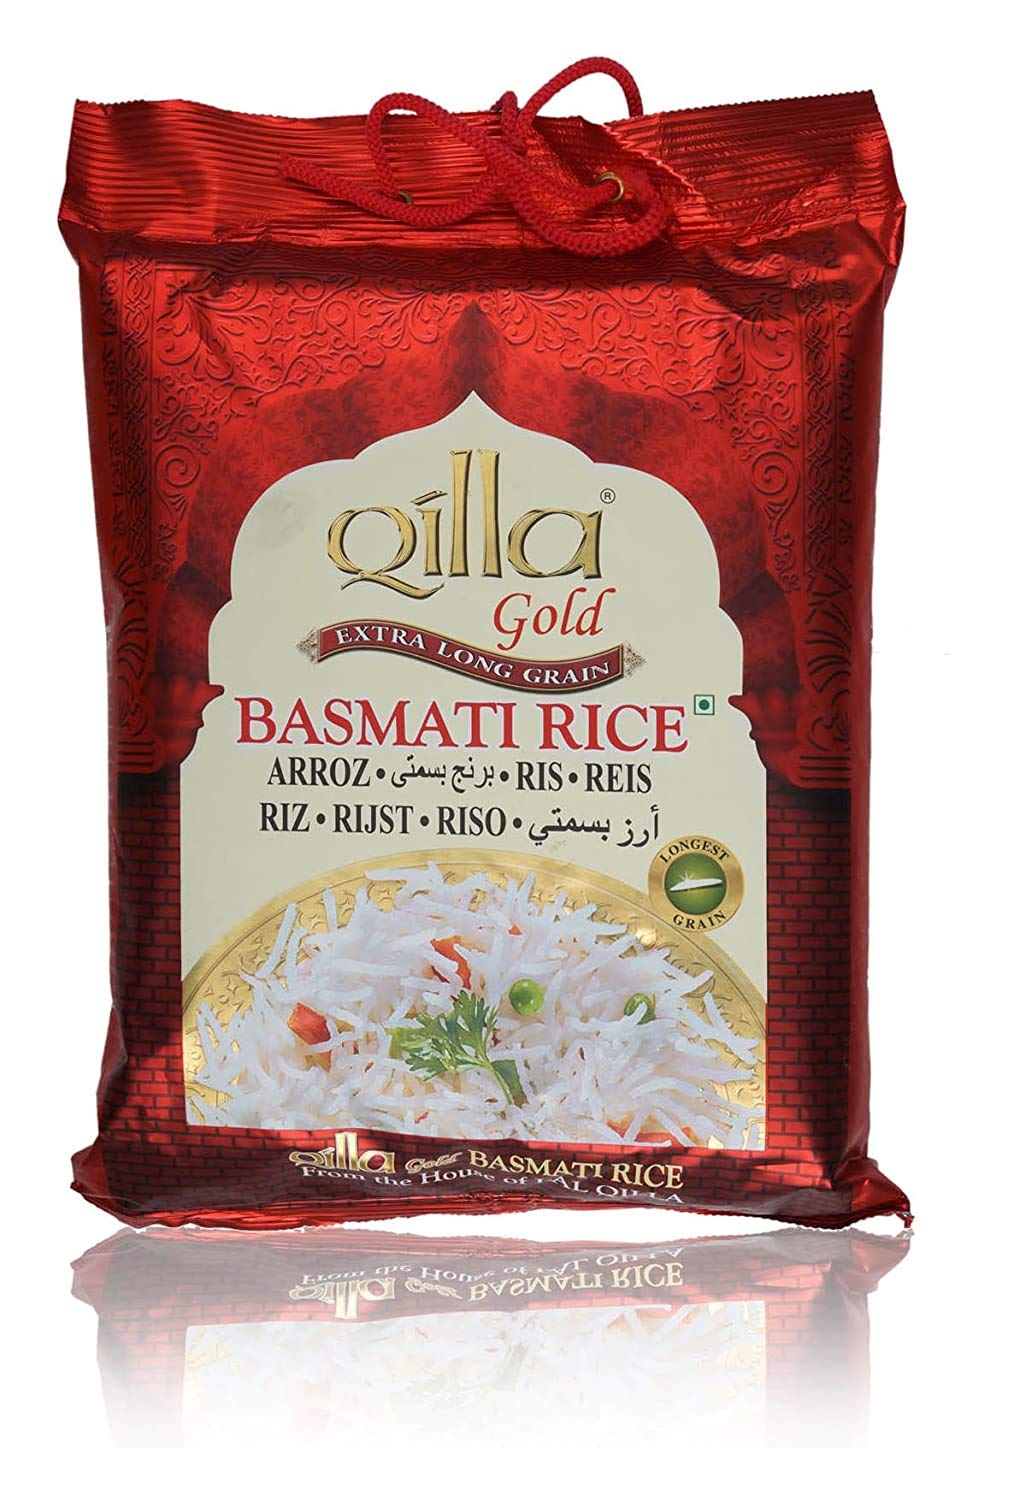 Qilla Gold Basmati Rice - 5 KGS